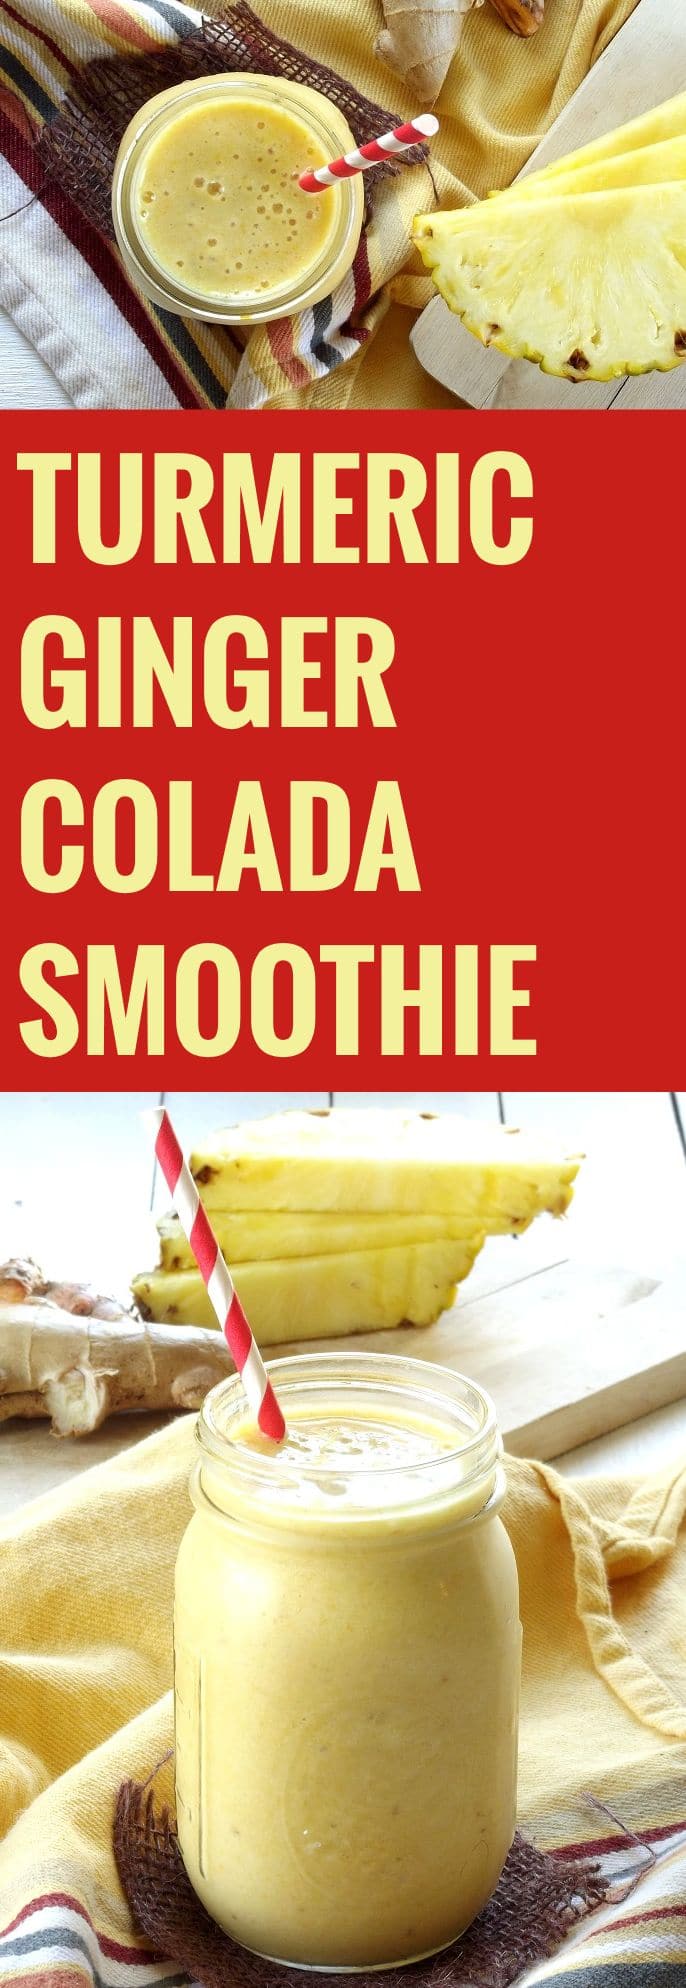 Turmeric Ginger Colada Smoothie